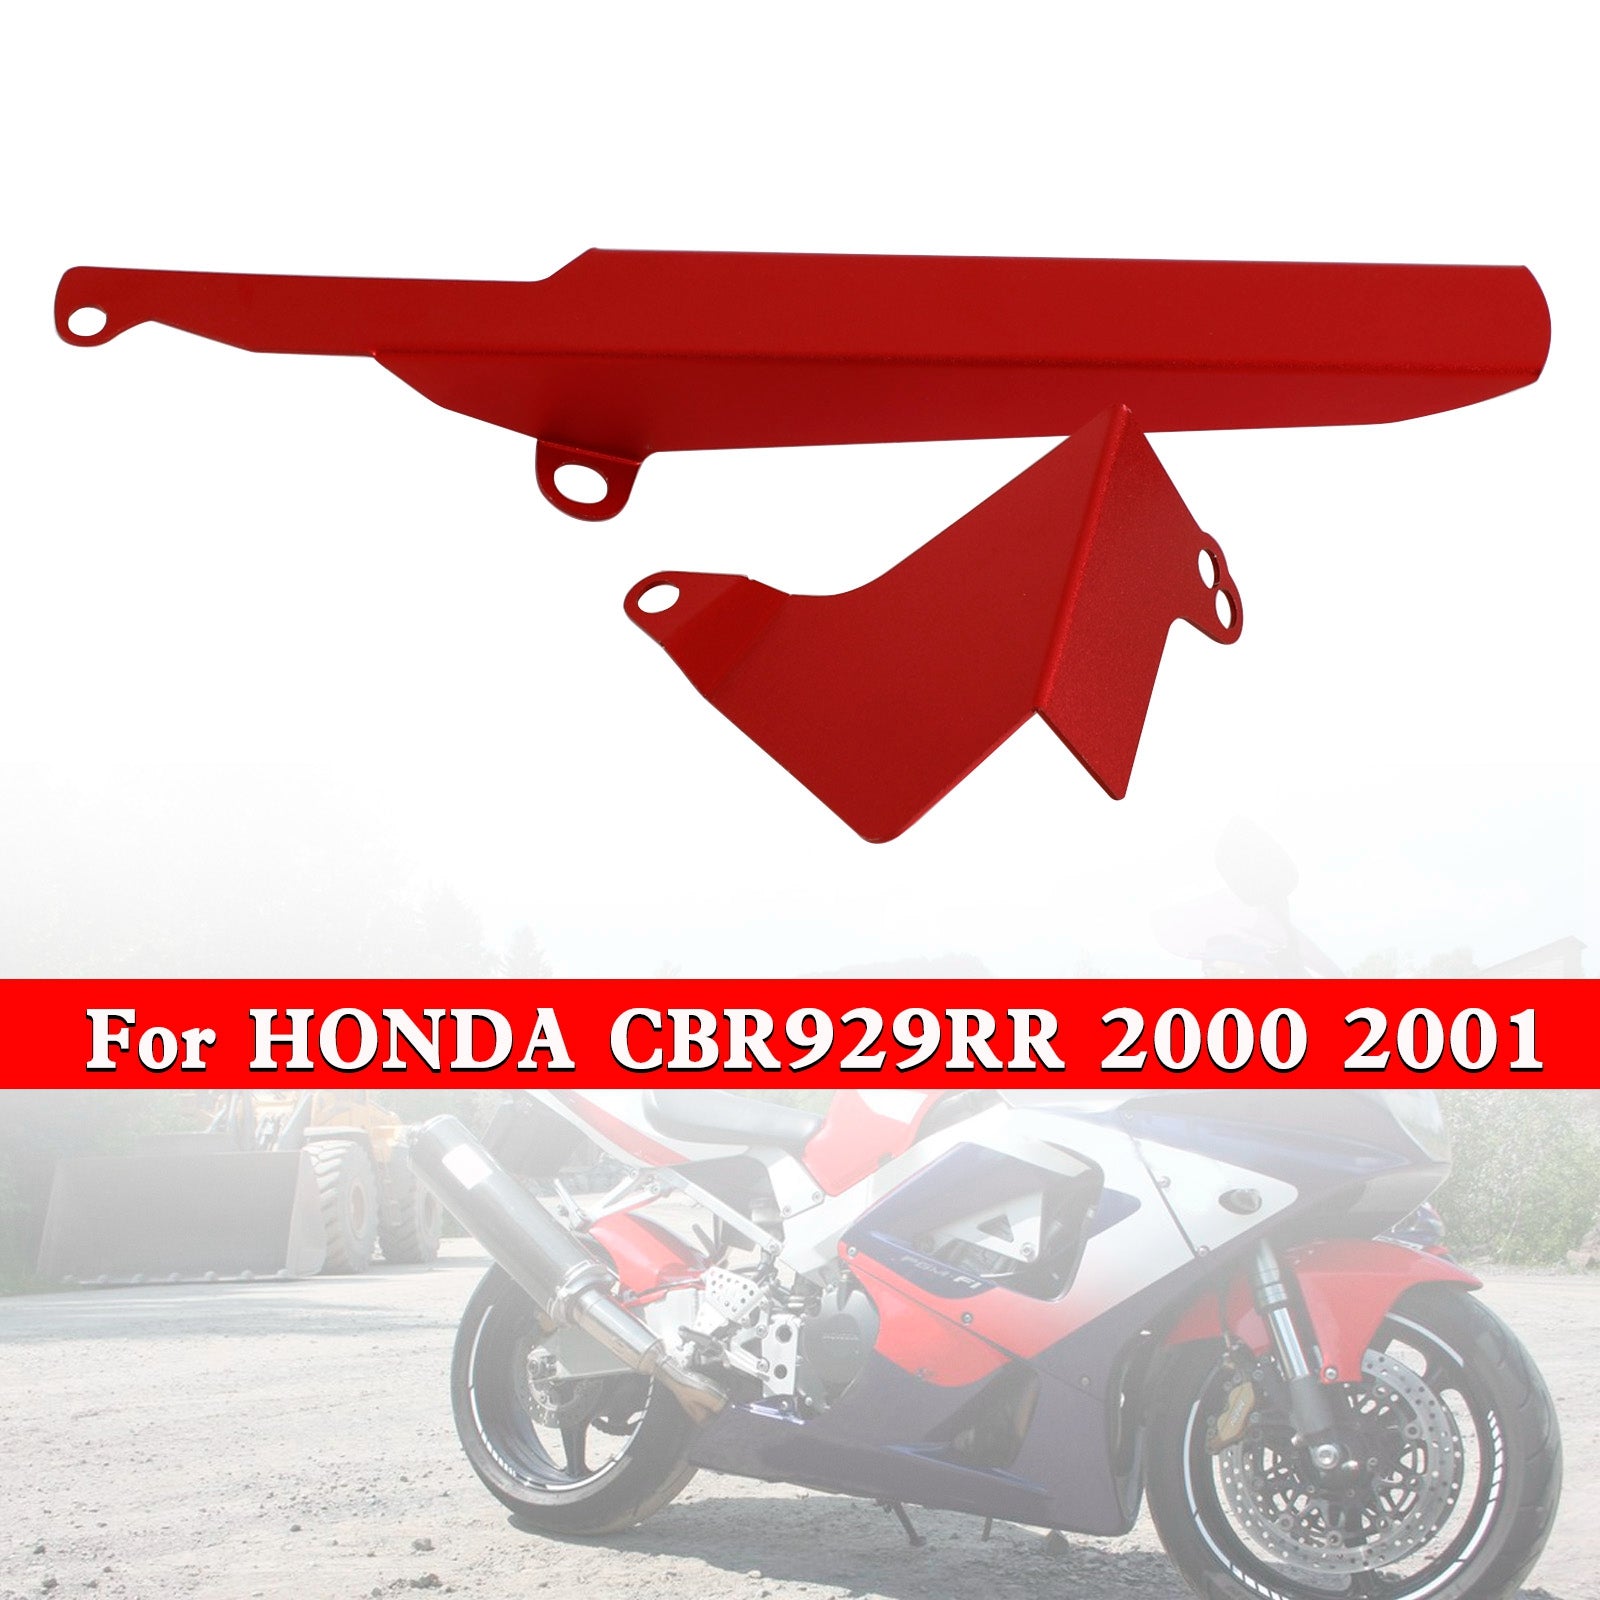 Rear Sprocket Chain Guard Protector Cover For Honda CBR929RR 2000-2001